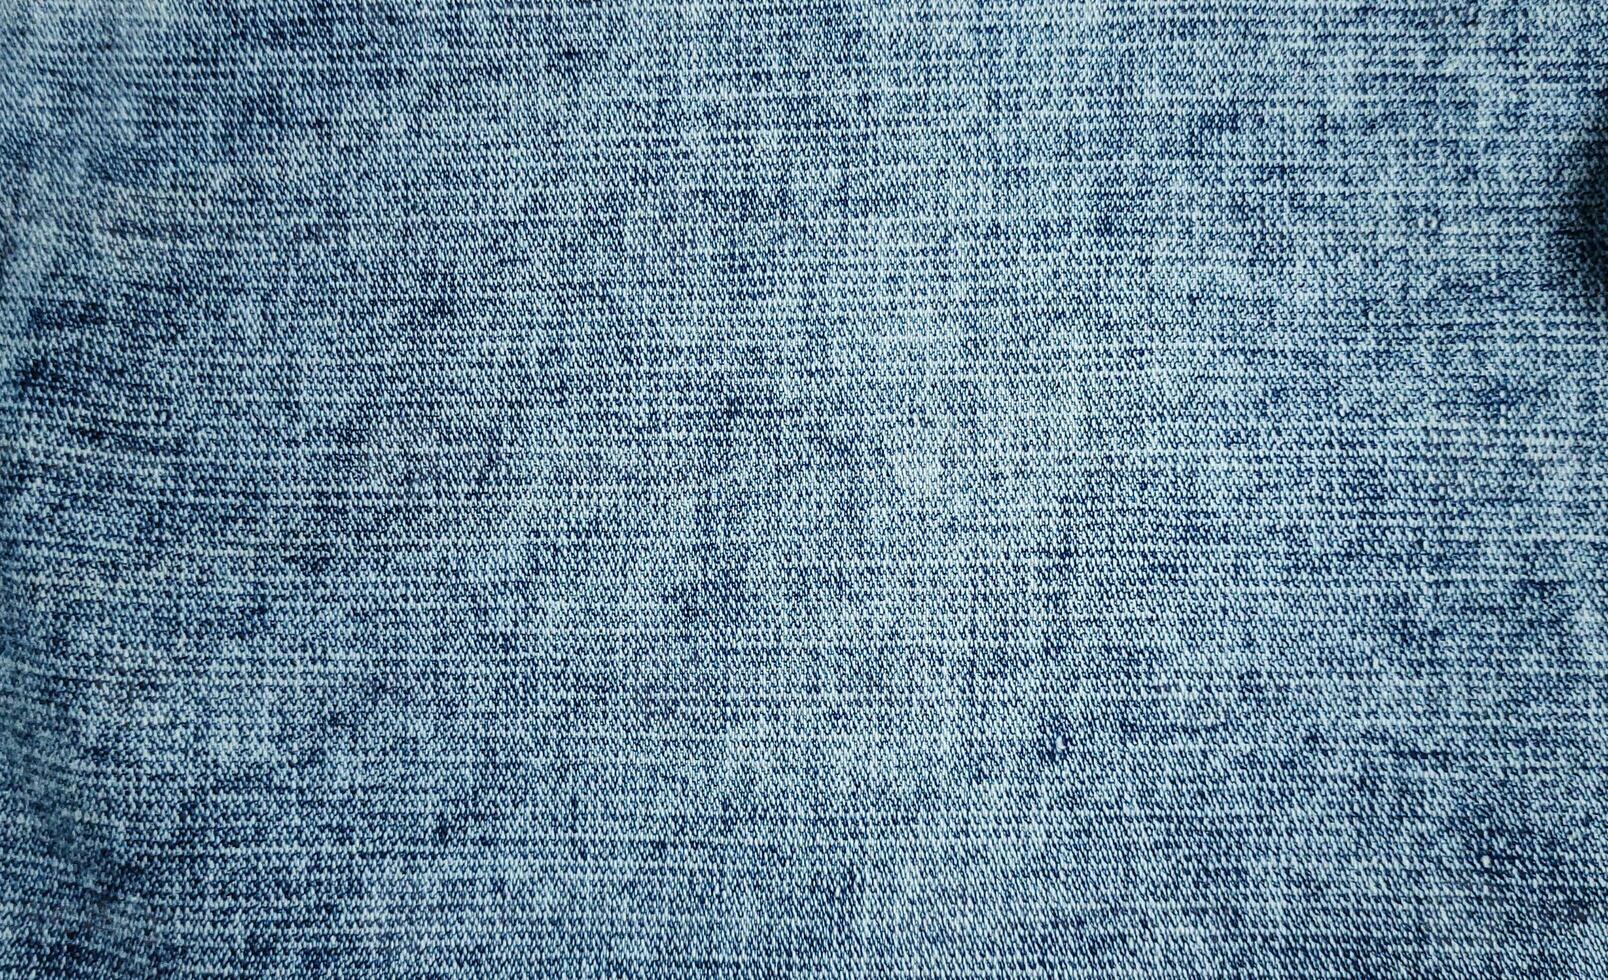 Light Blue denim fabric close up photography background, stone wash denim jeans cloth, denim texture, photo